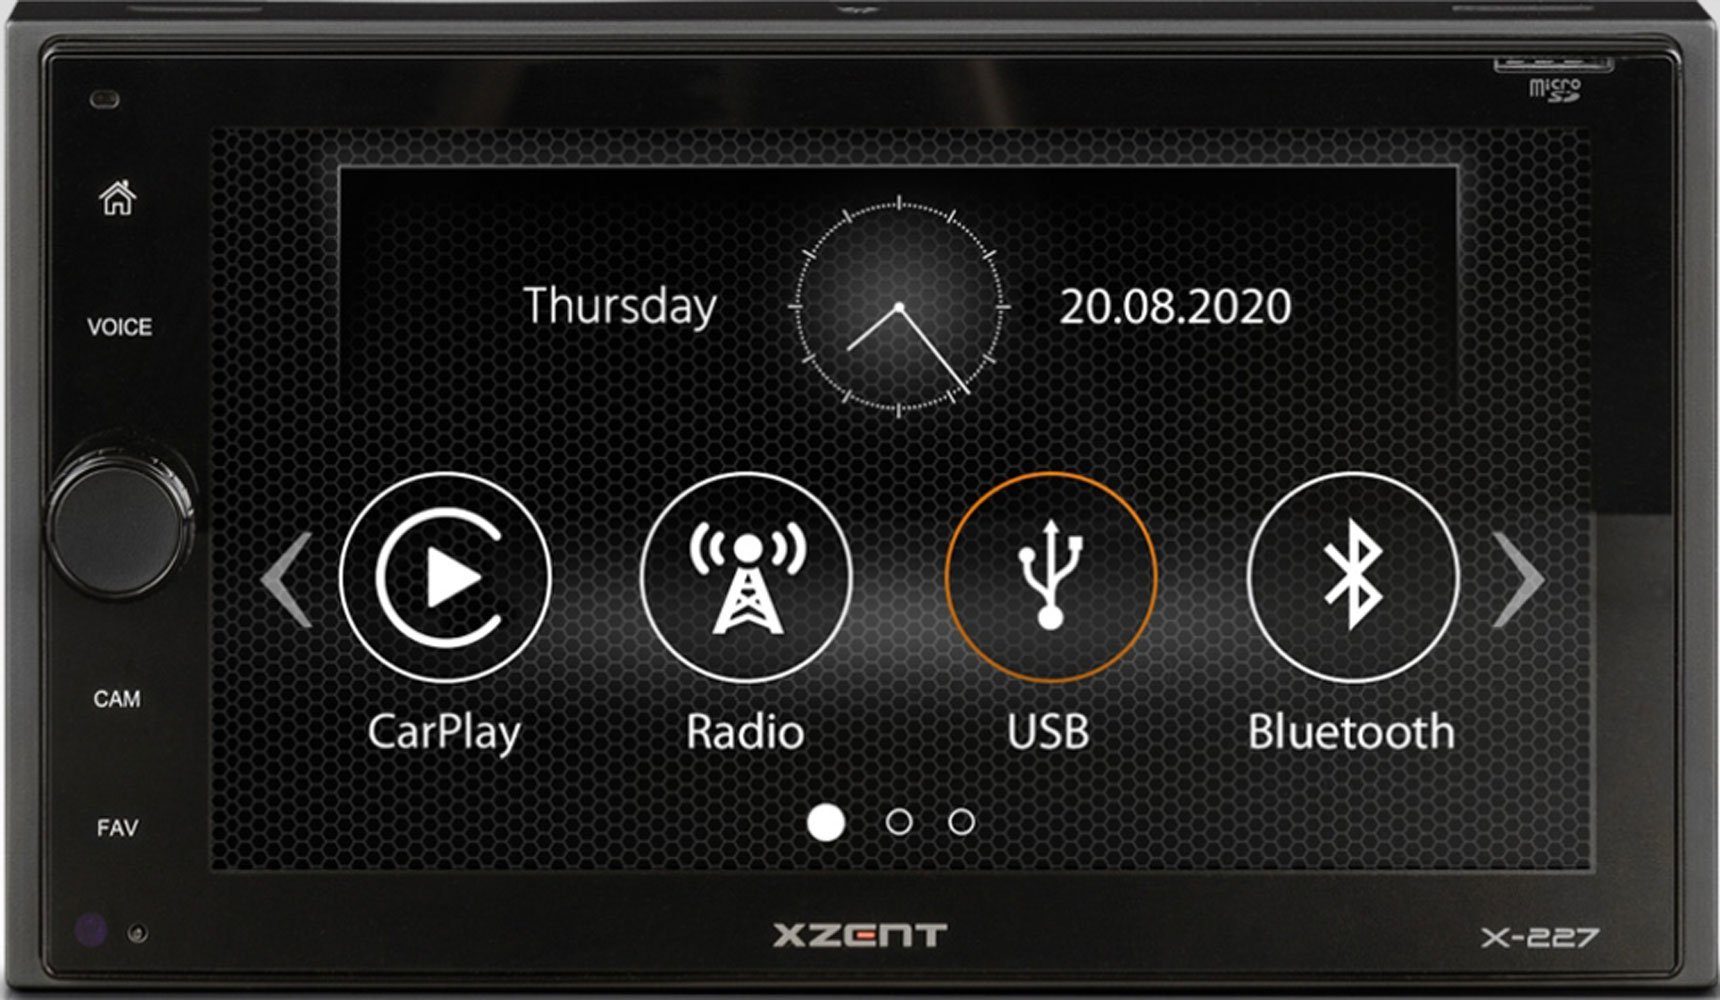 Xzent X-227 INFOTAINER MIT APPLE CARPLAY, DAB+, USB UND BLUETOOTH Autoradio